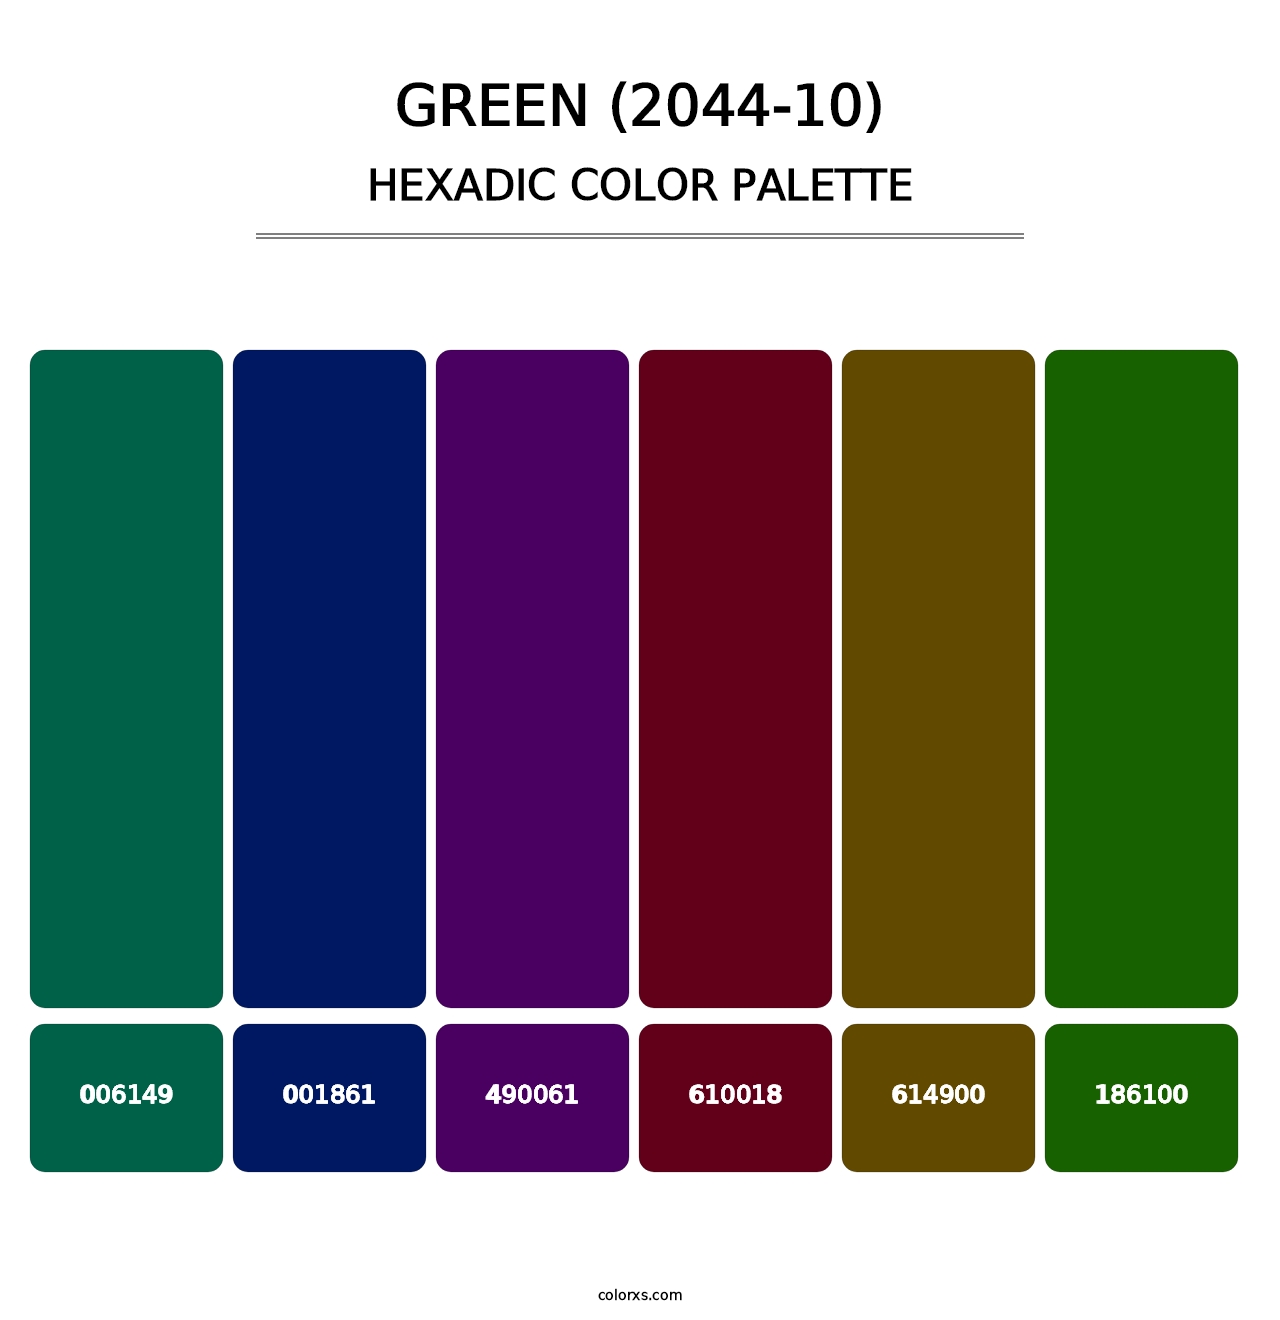 Green (2044-10) - Hexadic Color Palette